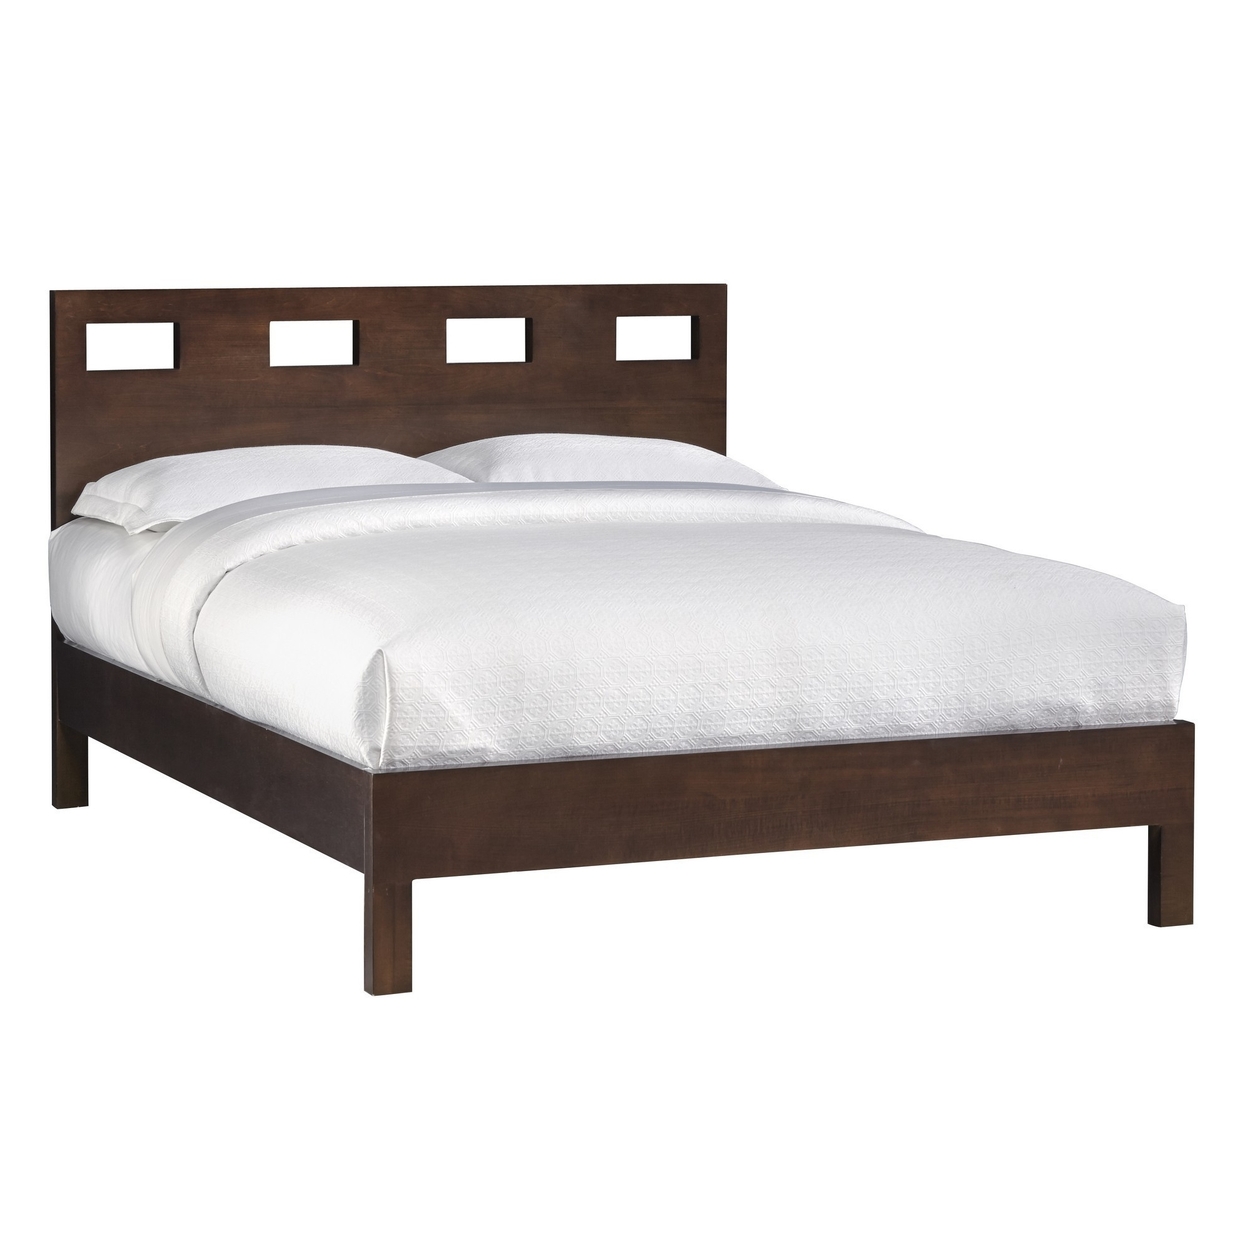 Yee Twin Size Bed, Cut Out Design Panel Headboard, Brown Mahogany Wood- Saltoro Sherpi